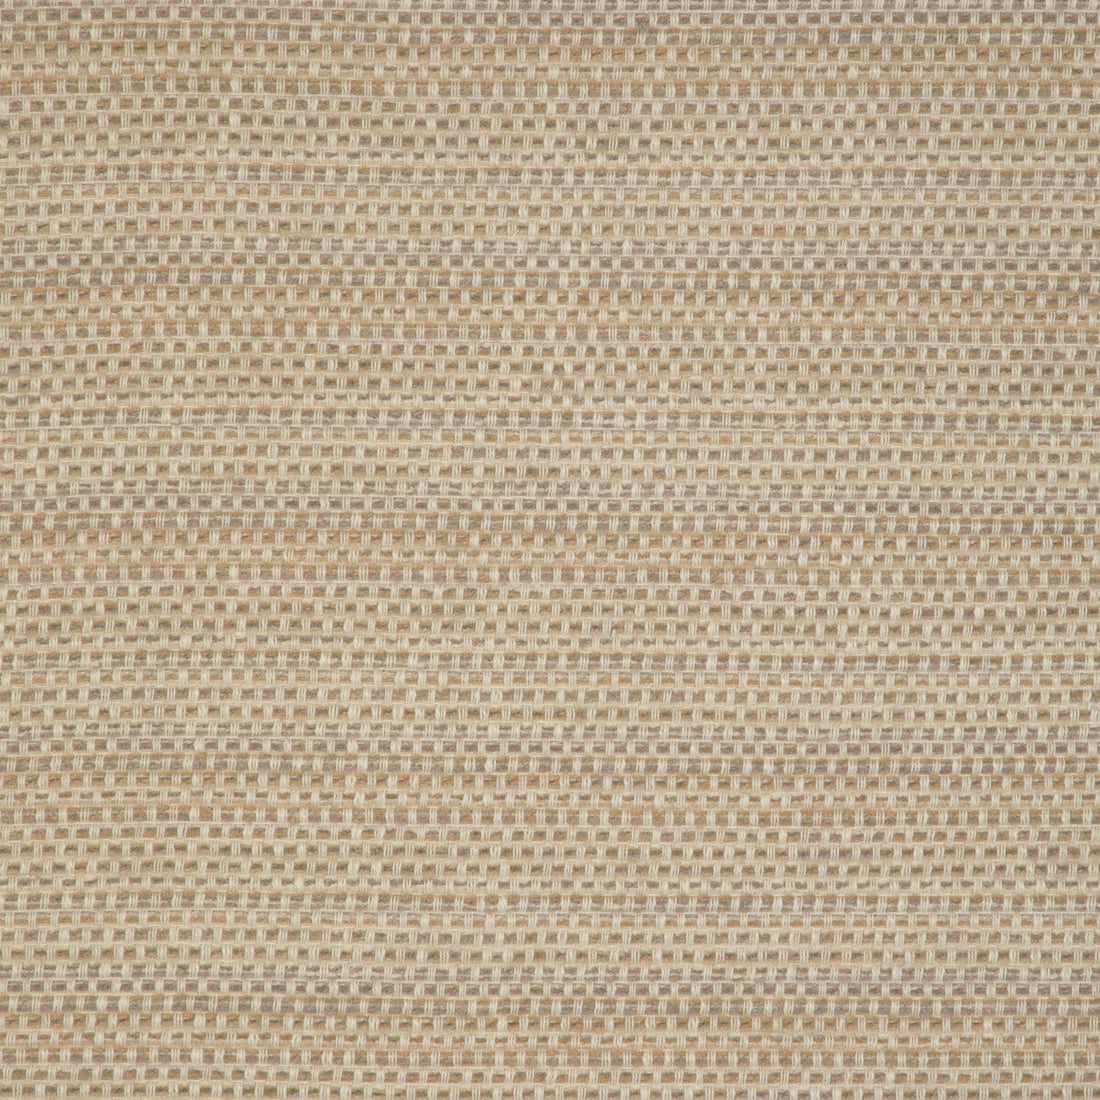 Kravet Smart fabric in 36994-16 color - pattern 36994.16.0 - by Kravet Smart in the Pavilion collection